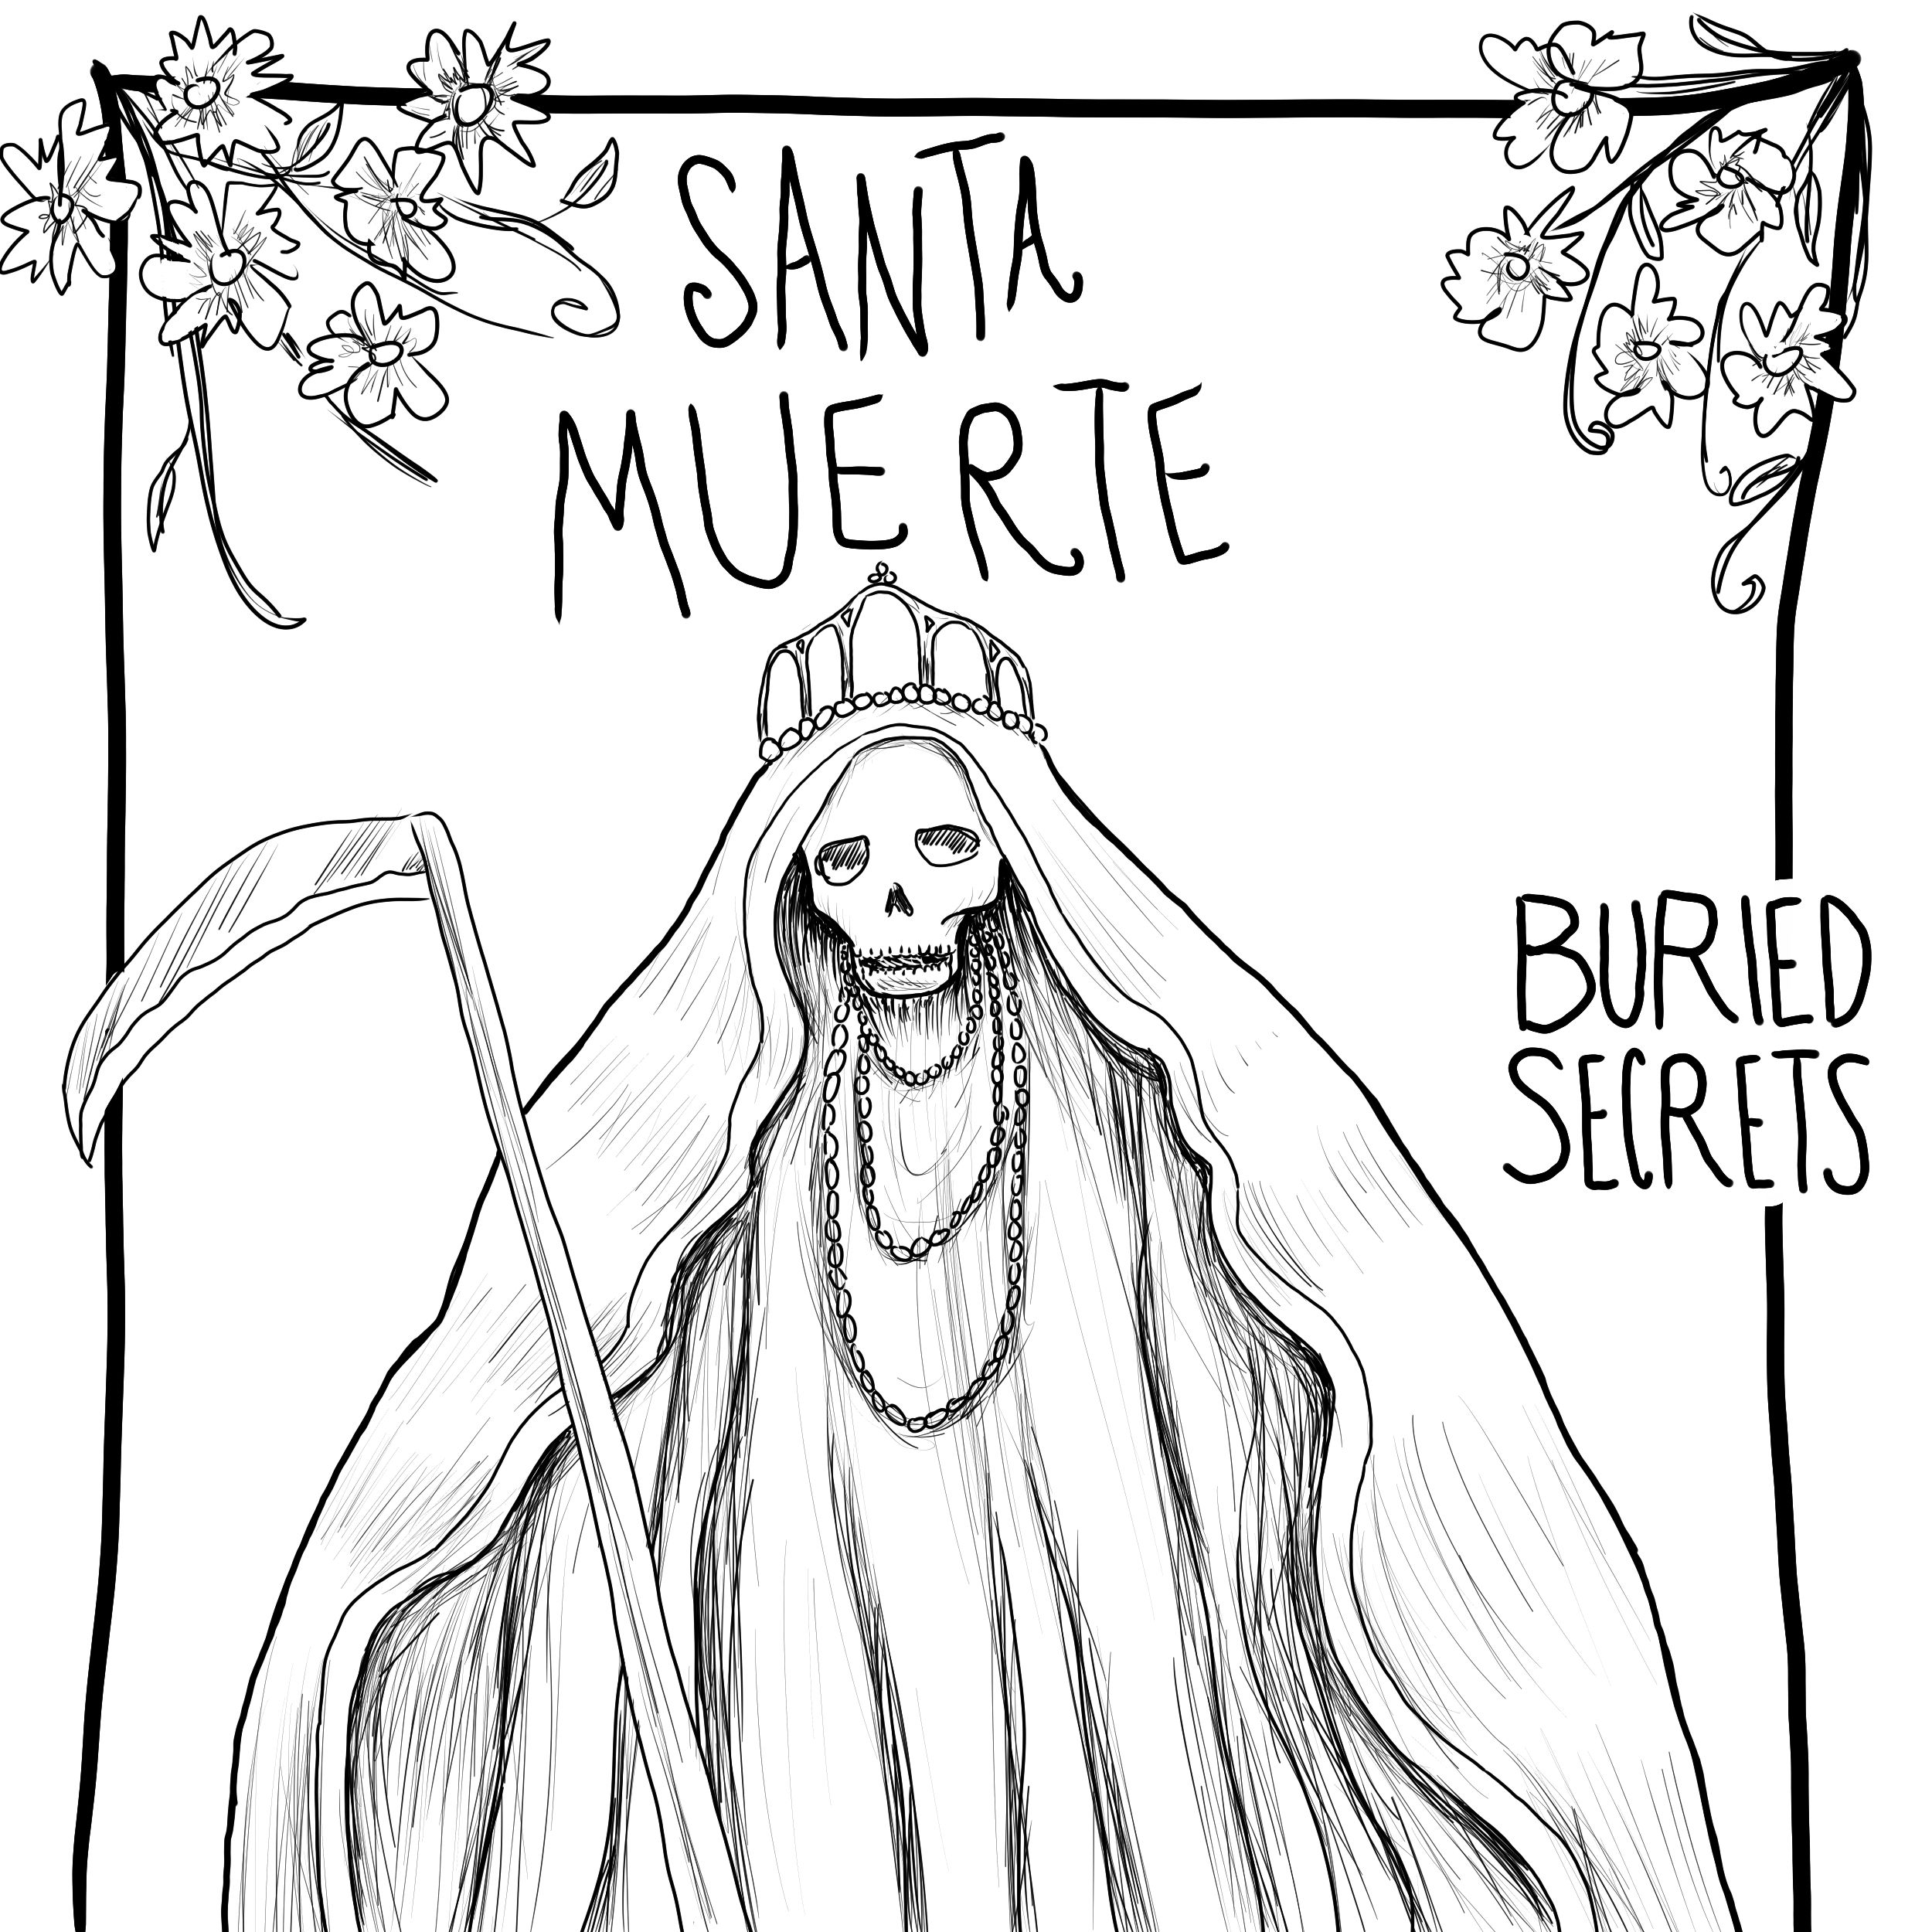 The Cult of Santa Muerte, aka Saint Death